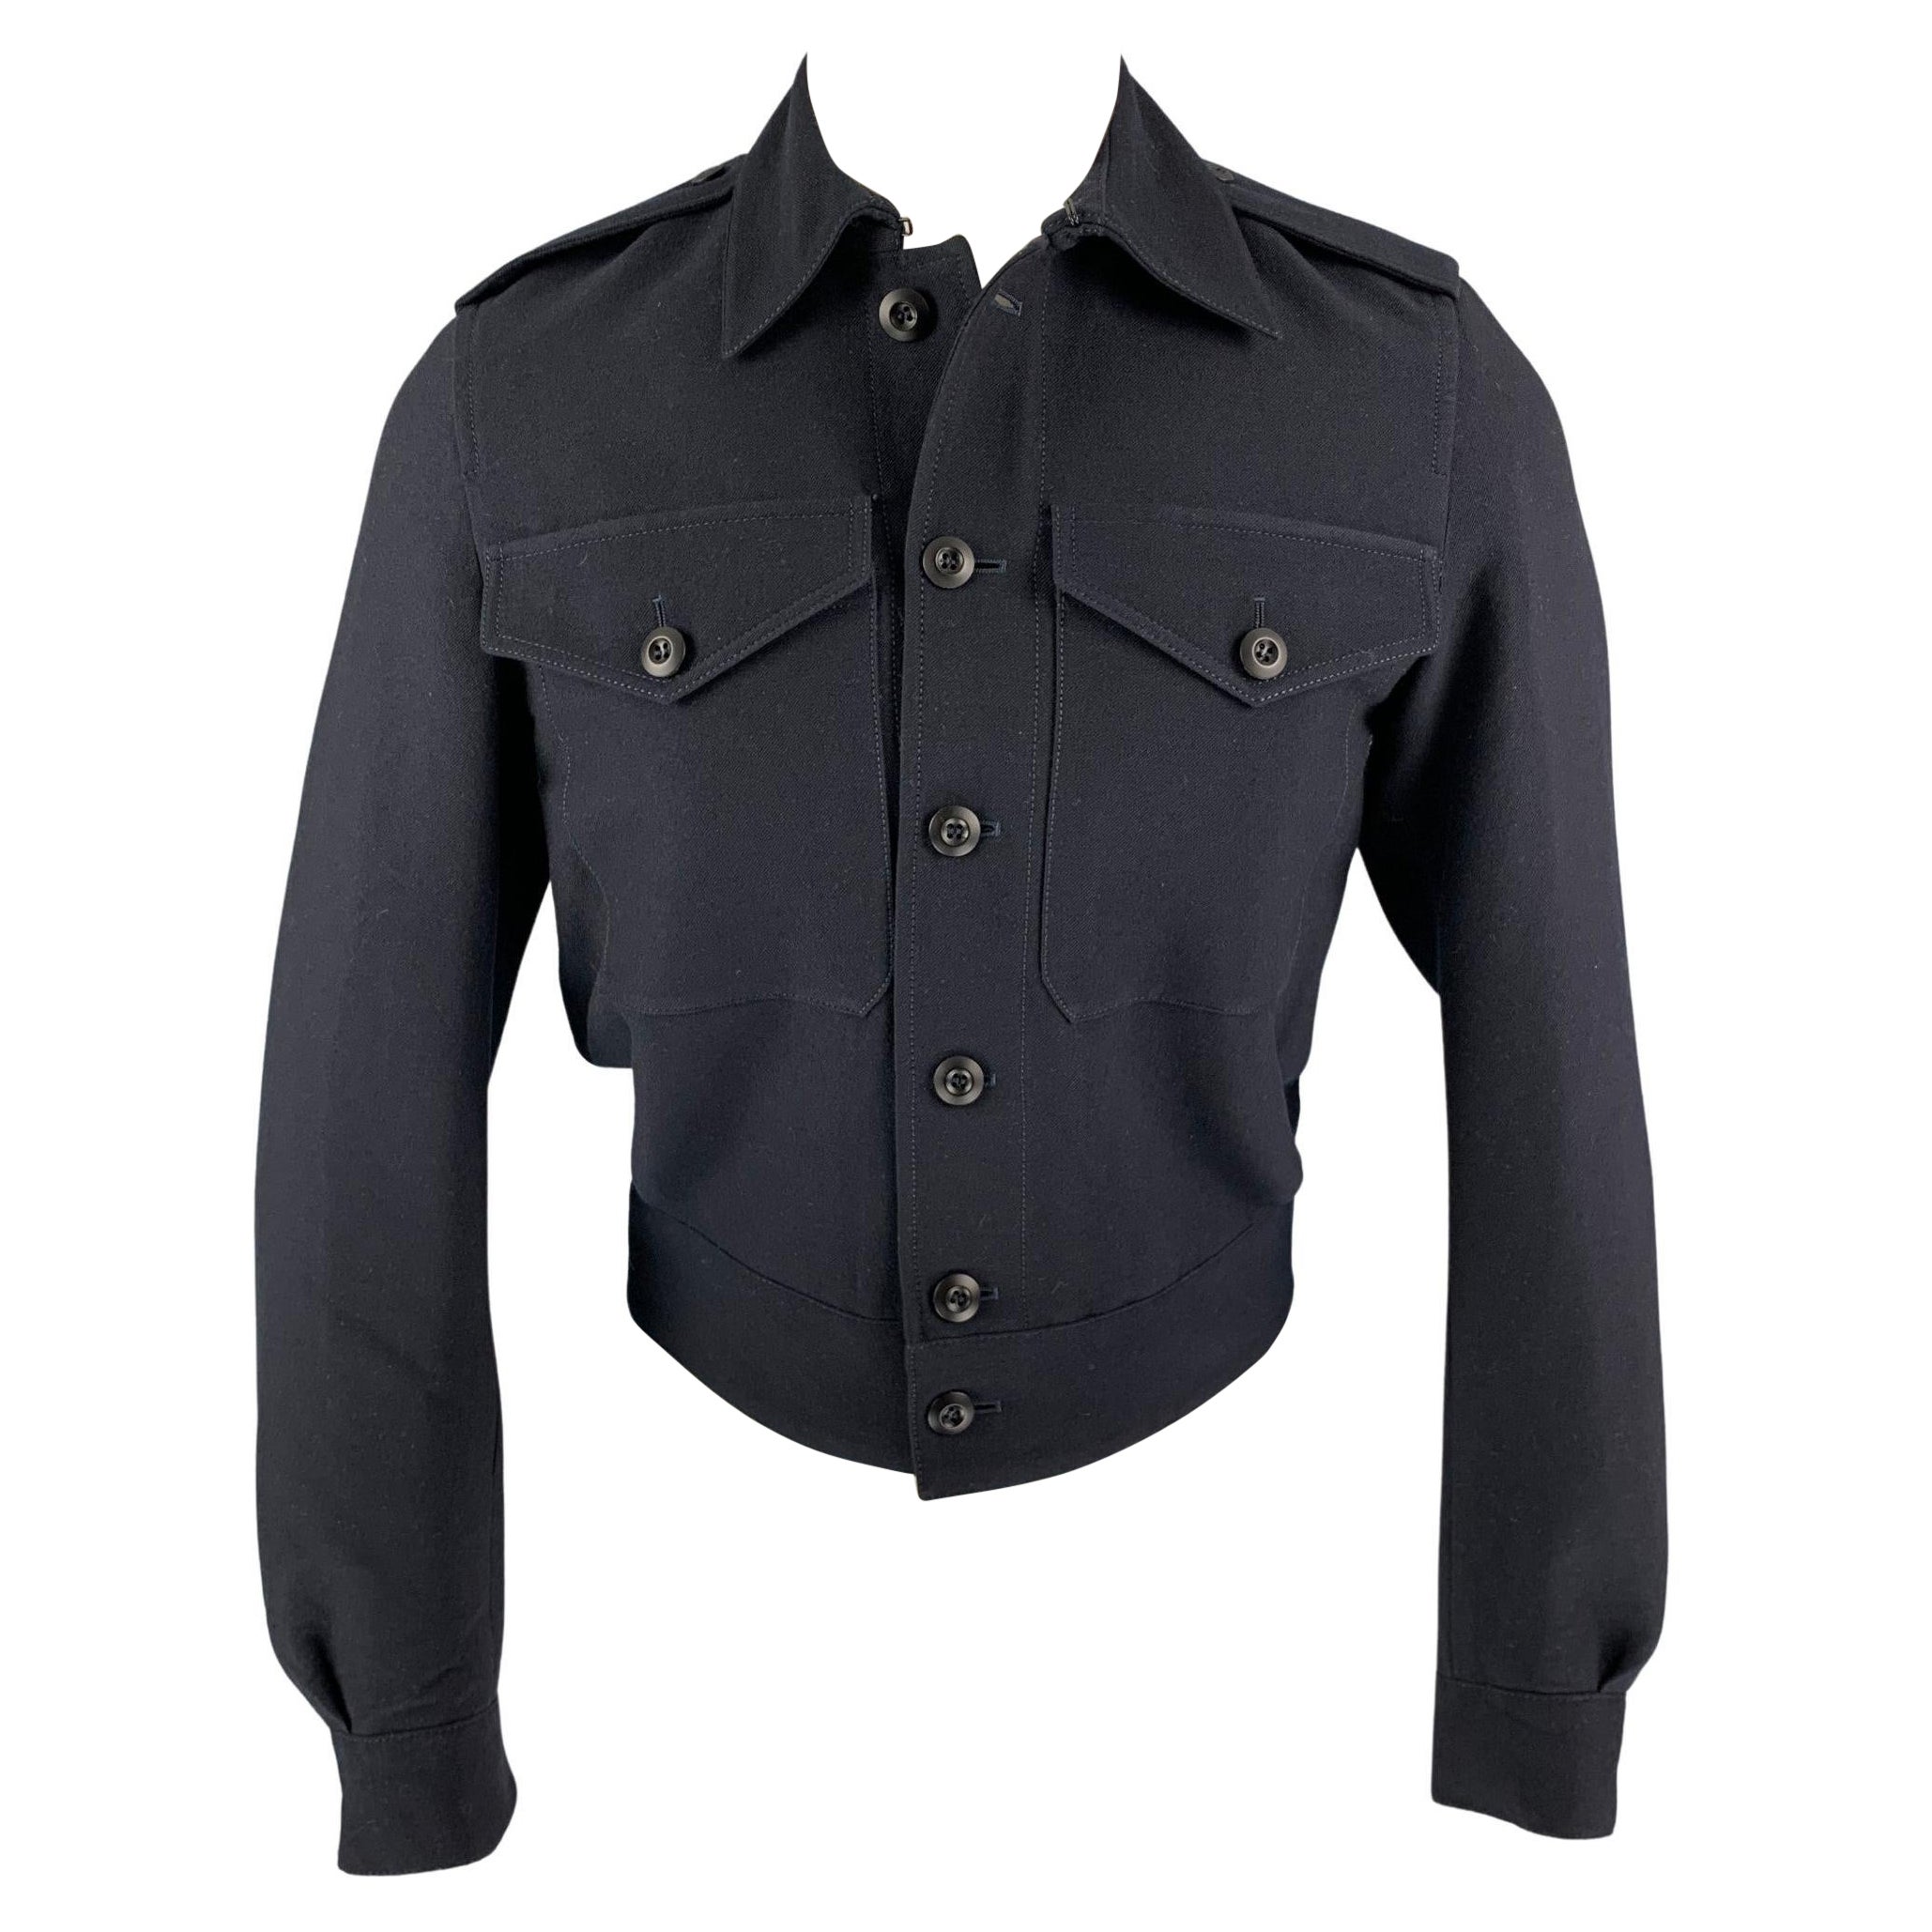 BURBERRY PRORSUM Spring 2015 Size 38 Navy Blue Cashmere Blend Jacket